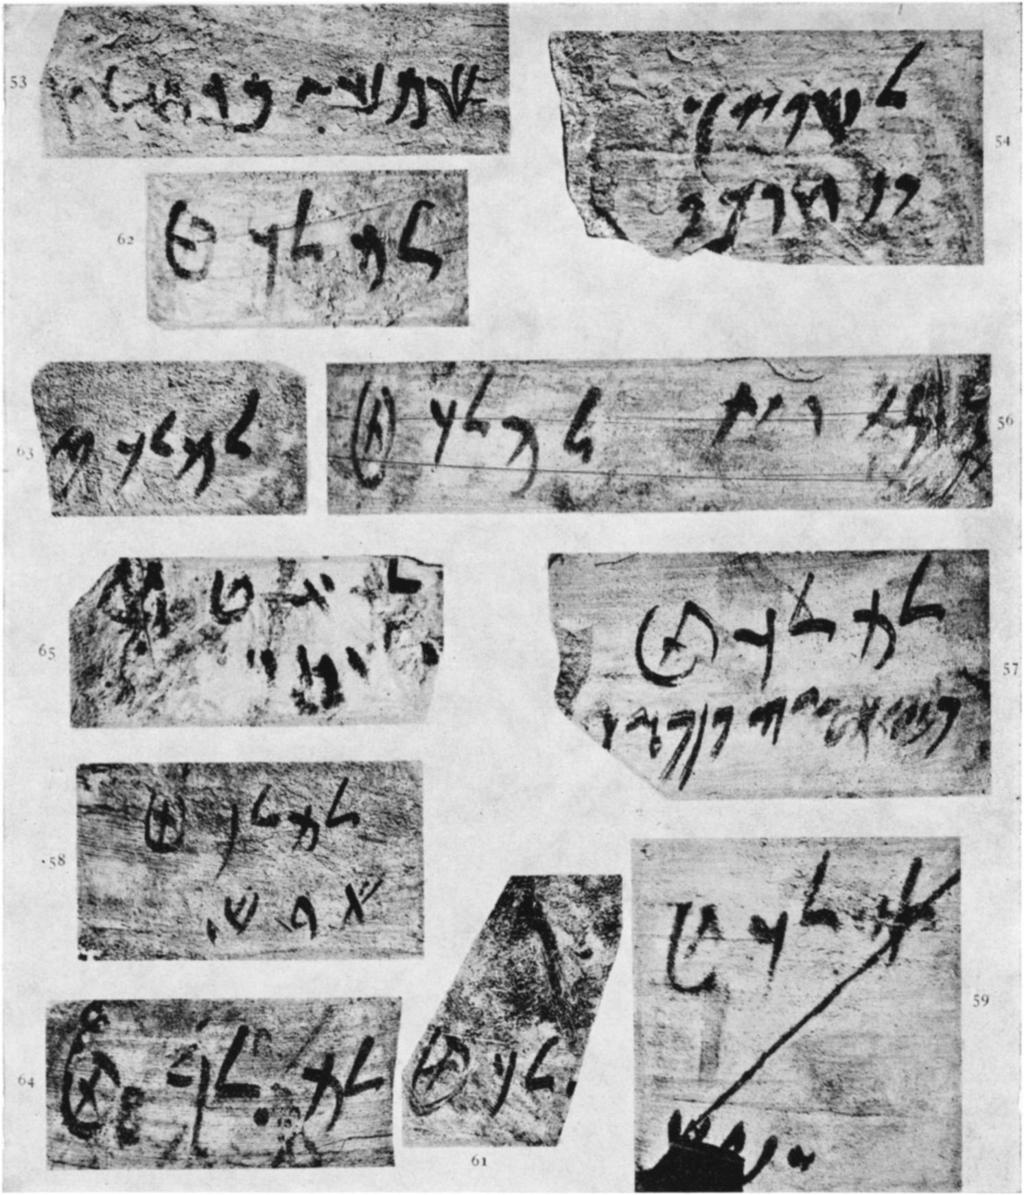 PLATE 3 A: Elephantine jar inscriptions, from M. Lidzbarski: Ph?